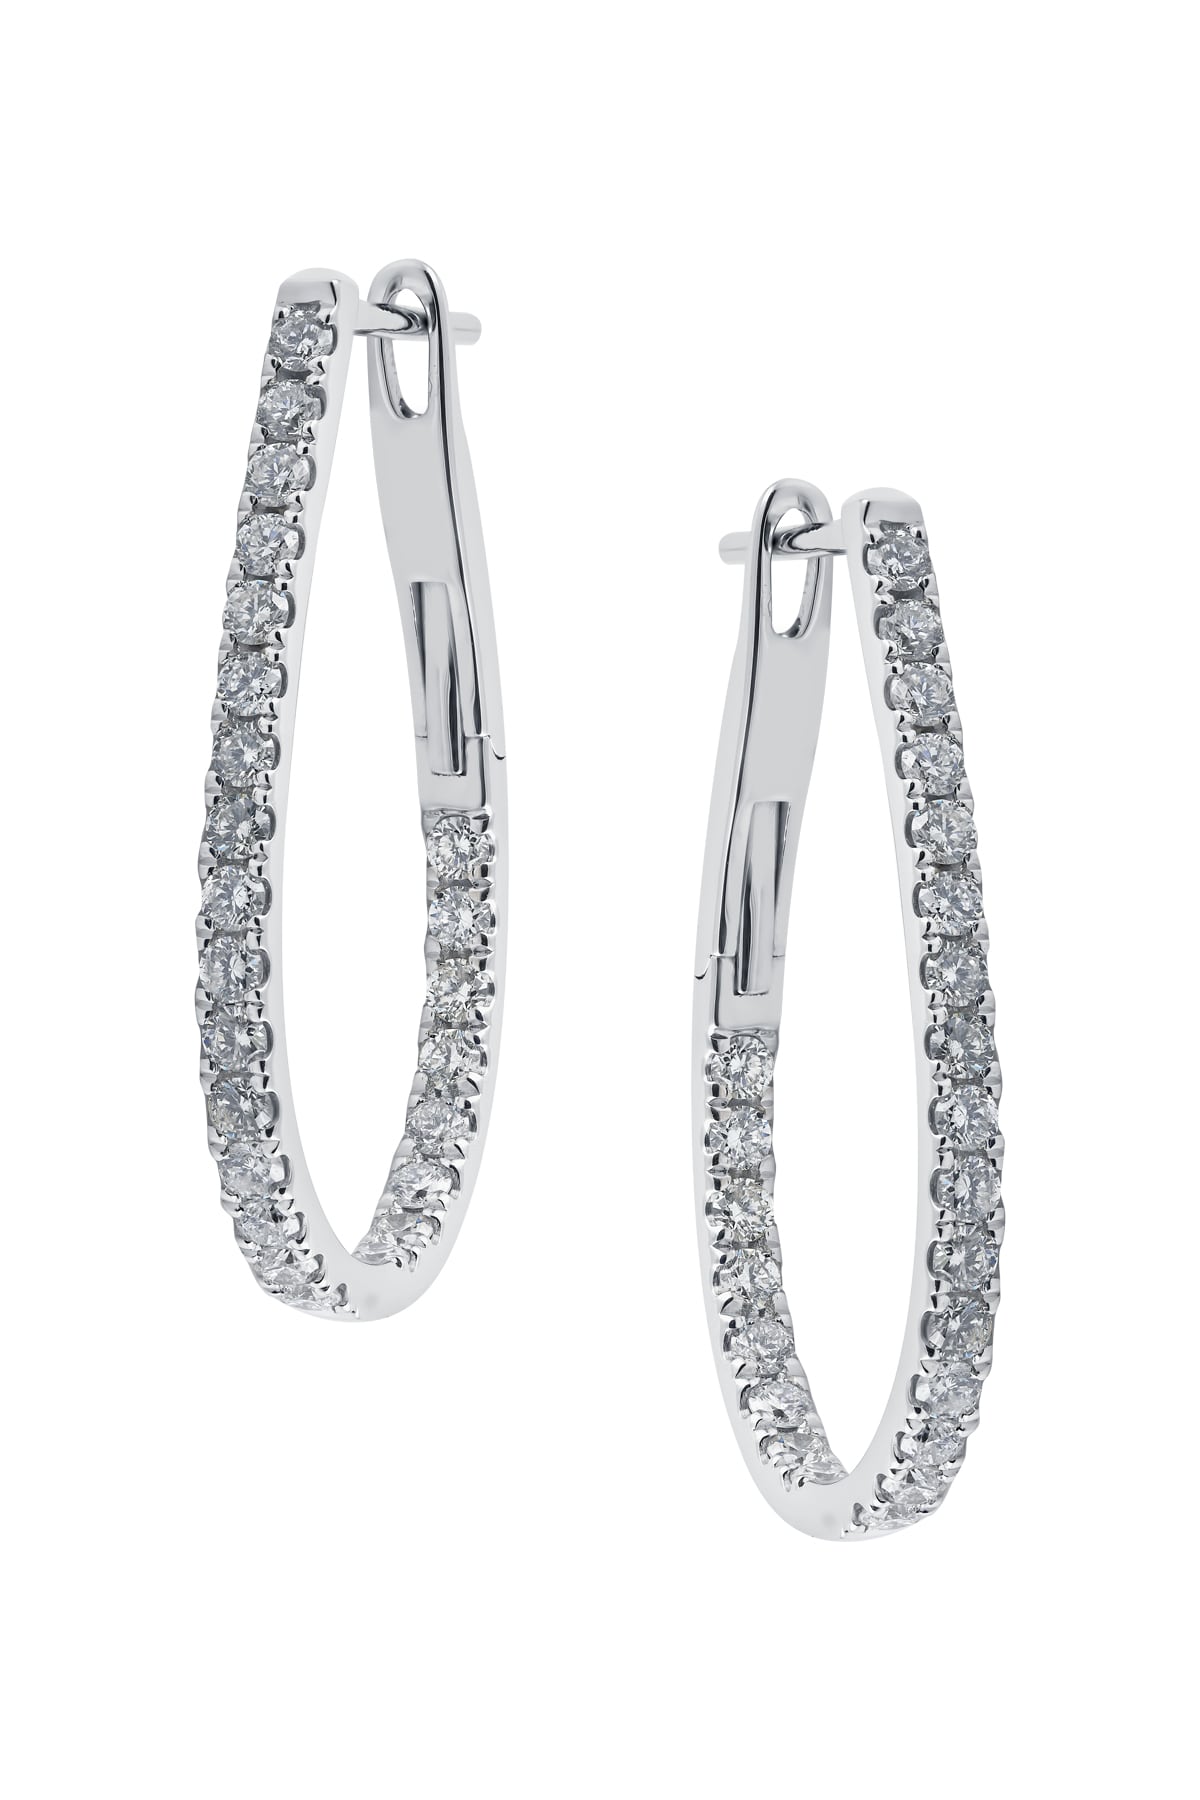 Large Oval Diamond Huggie Earrings from LeGassick Diamonds & Jewellery, Gold Coast Australia.